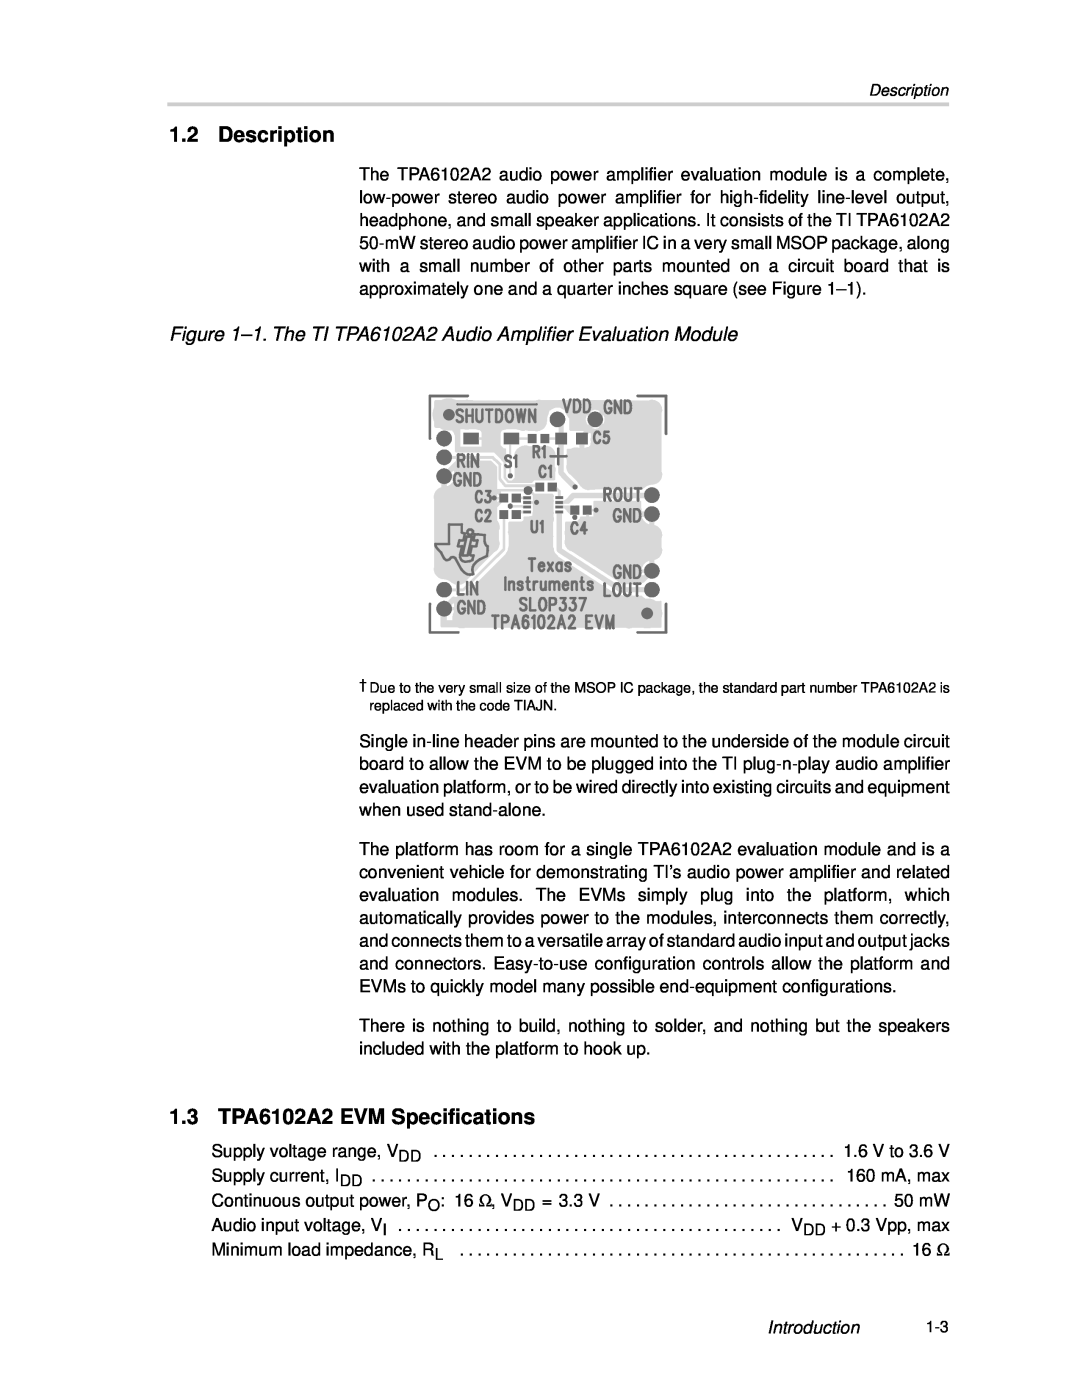 Texas Instruments manual Description, 1.3 TPA6102A2 EVM Specifications, Introduction 